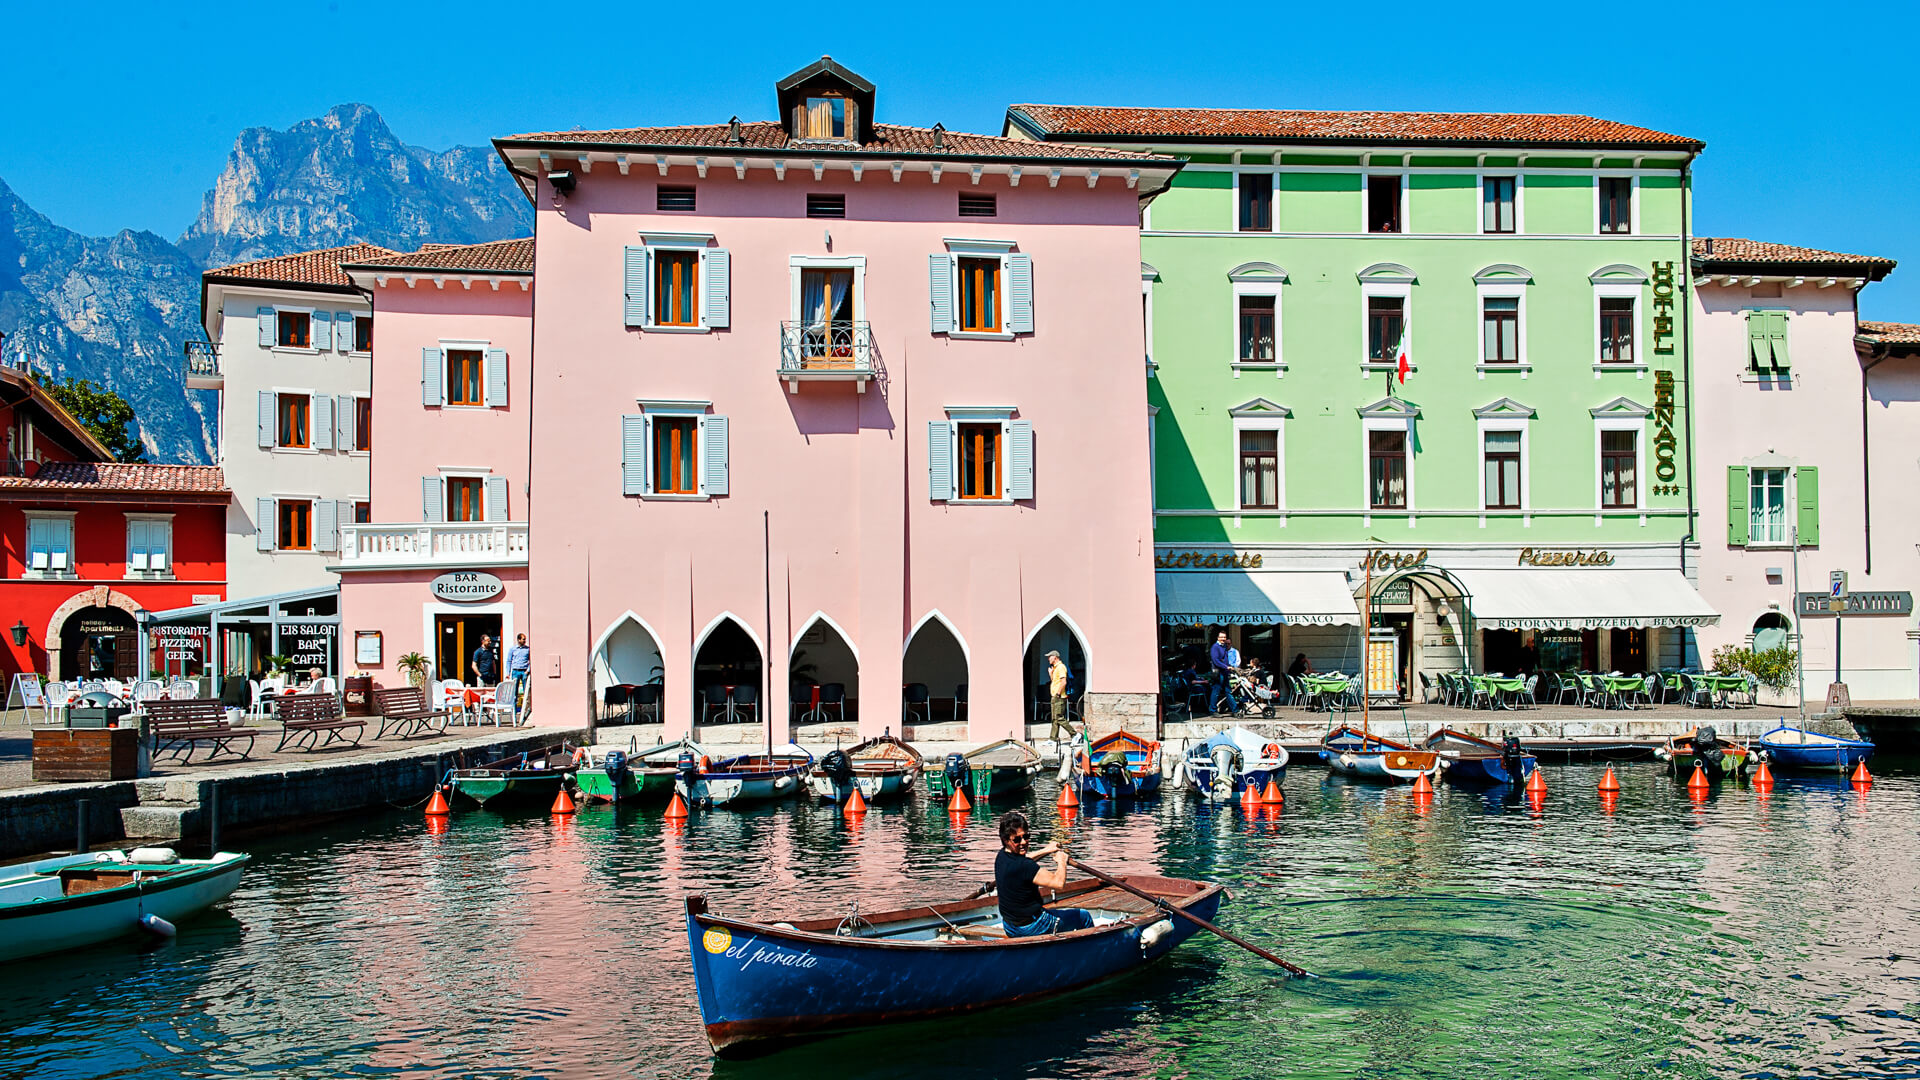 Hotel Benaco • Torbole harbor, Italy, facing the Garda lake. Since 1908